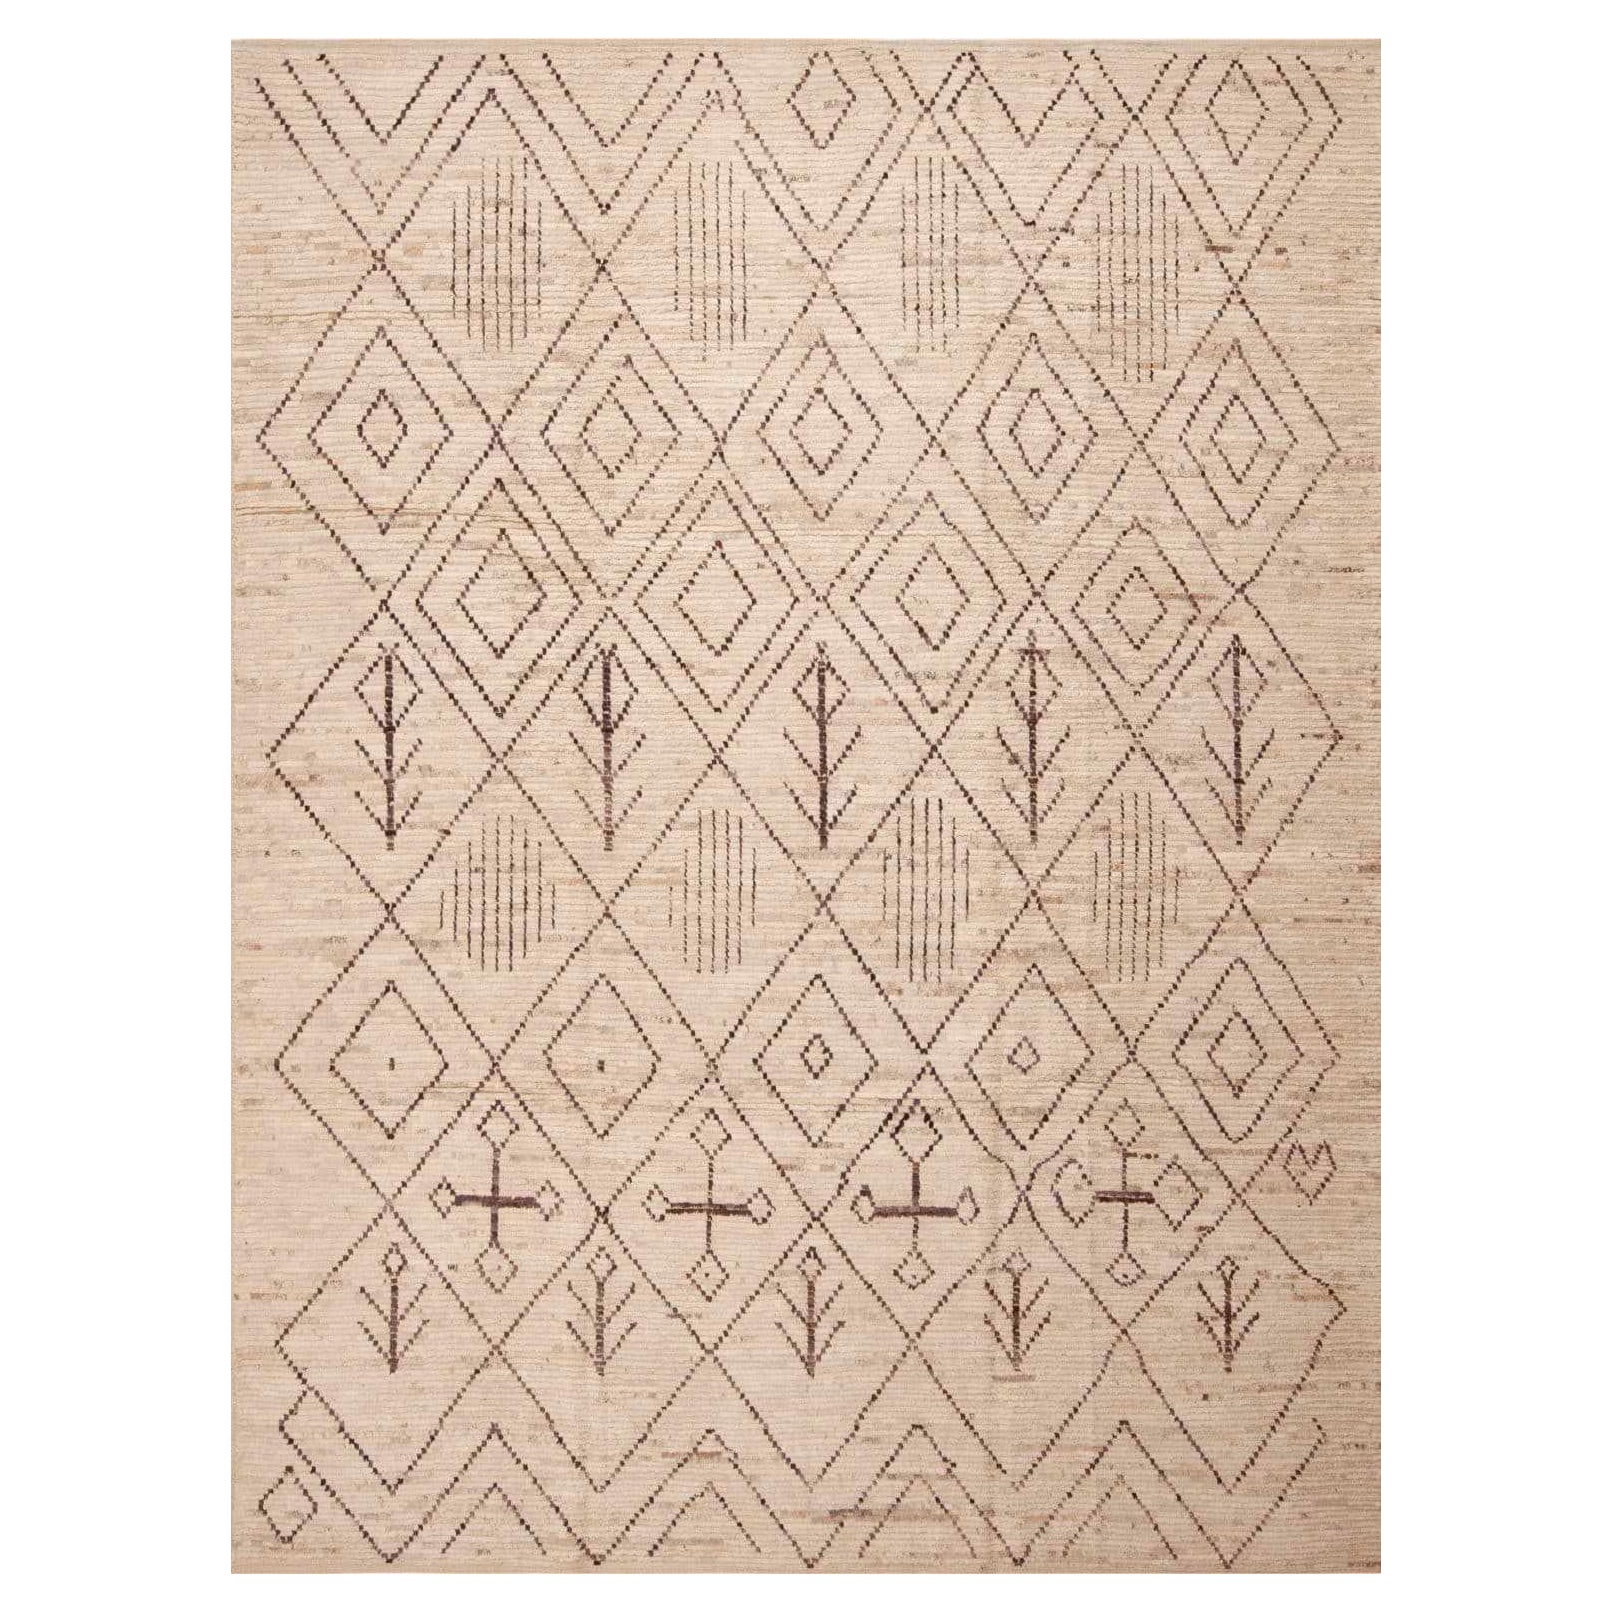 Nazmiyal Collection Modern Tribal Moroccan Beni Ourain Design Rug 9'3" x 12' For Sale